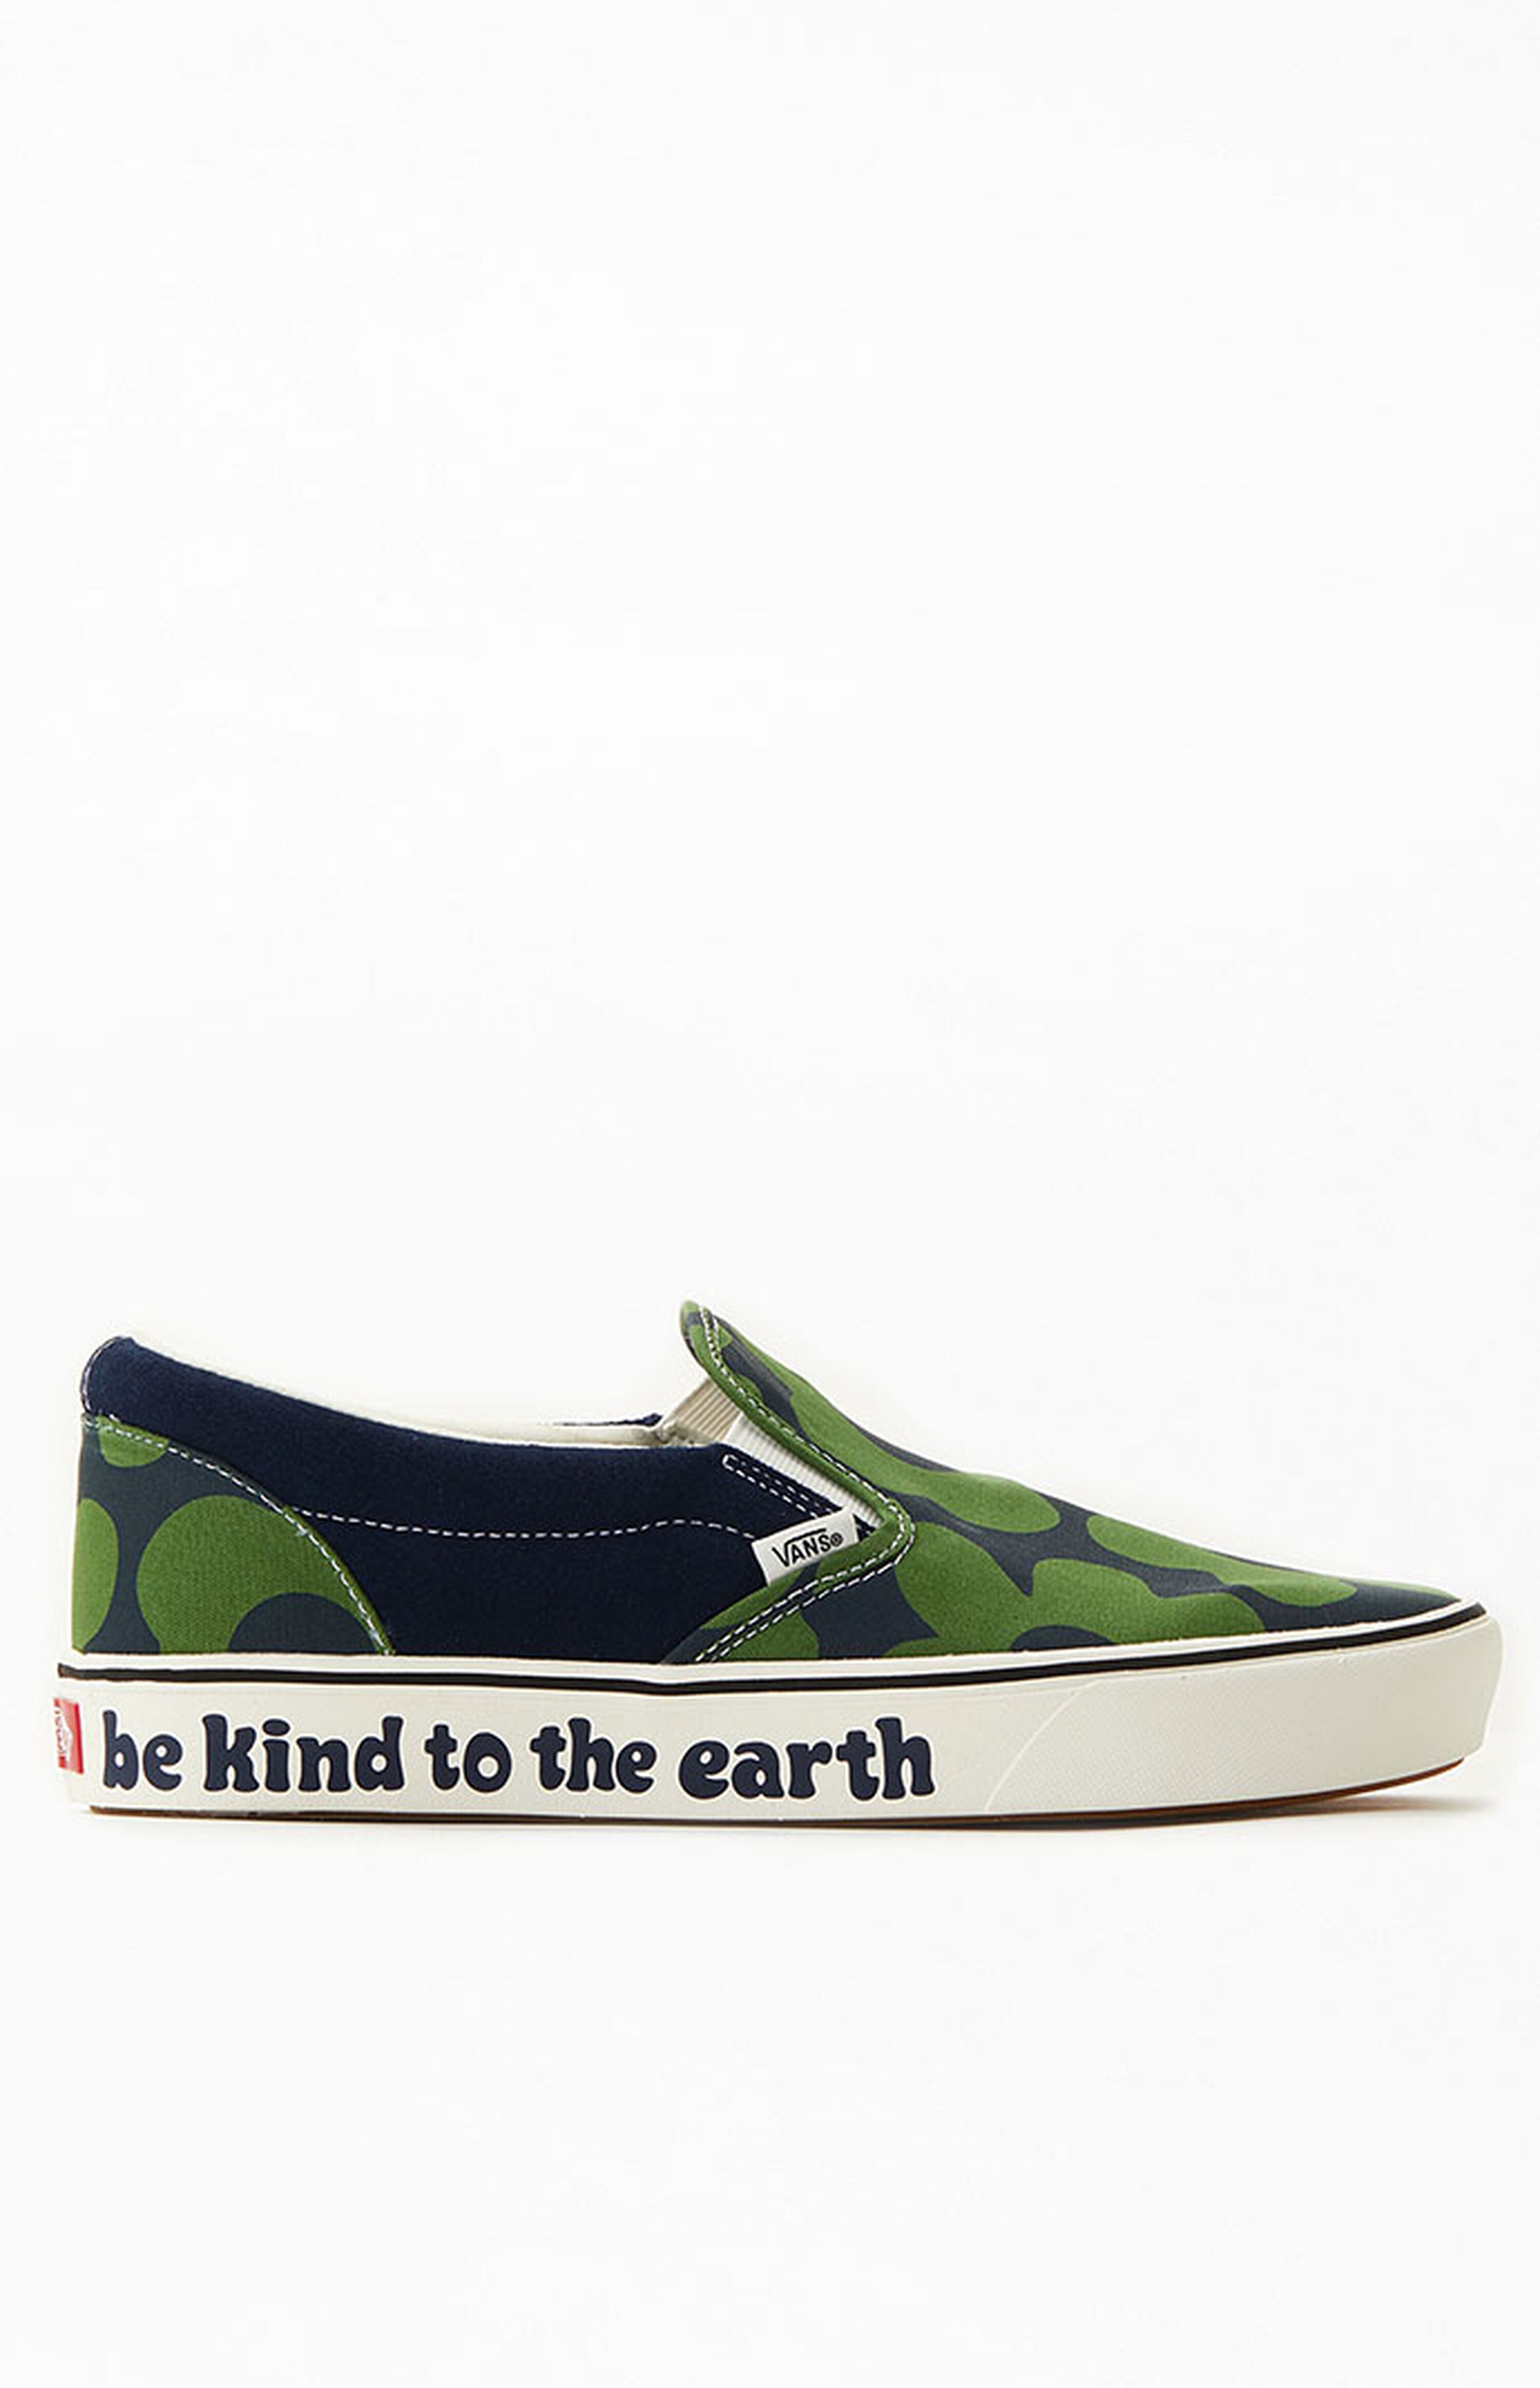 Vans Men's ComfyCush Slip On Floral Shoes (Green/Navy, Sizes 9-12)